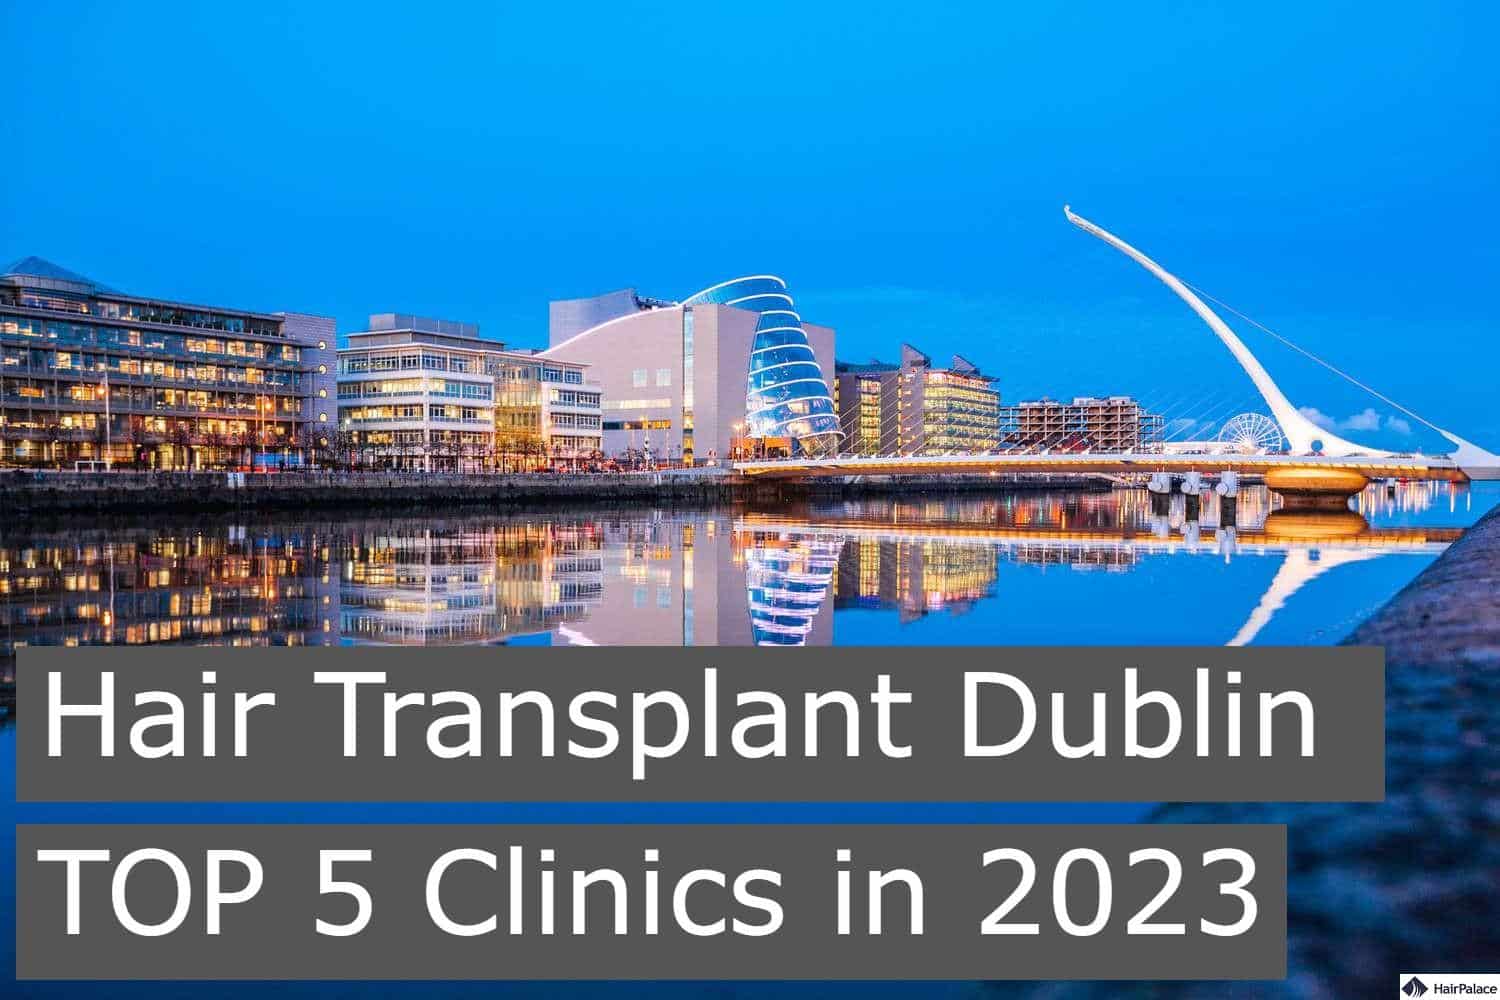 hair transplant dublin TOP 5 clinics in 2023